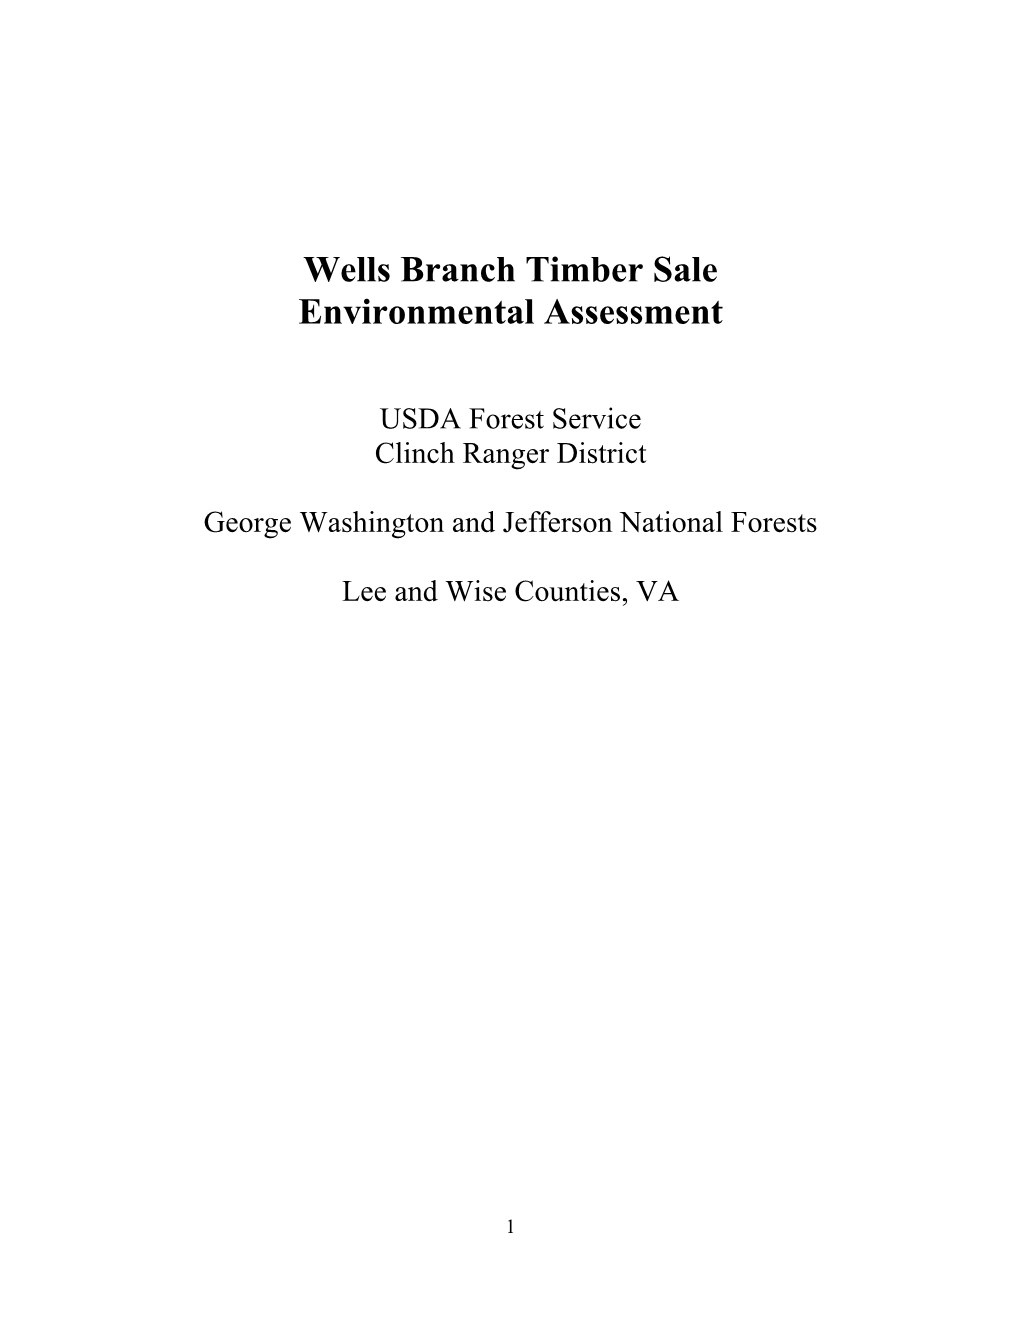 Wells Branch Timber Sale Environmental Assessment